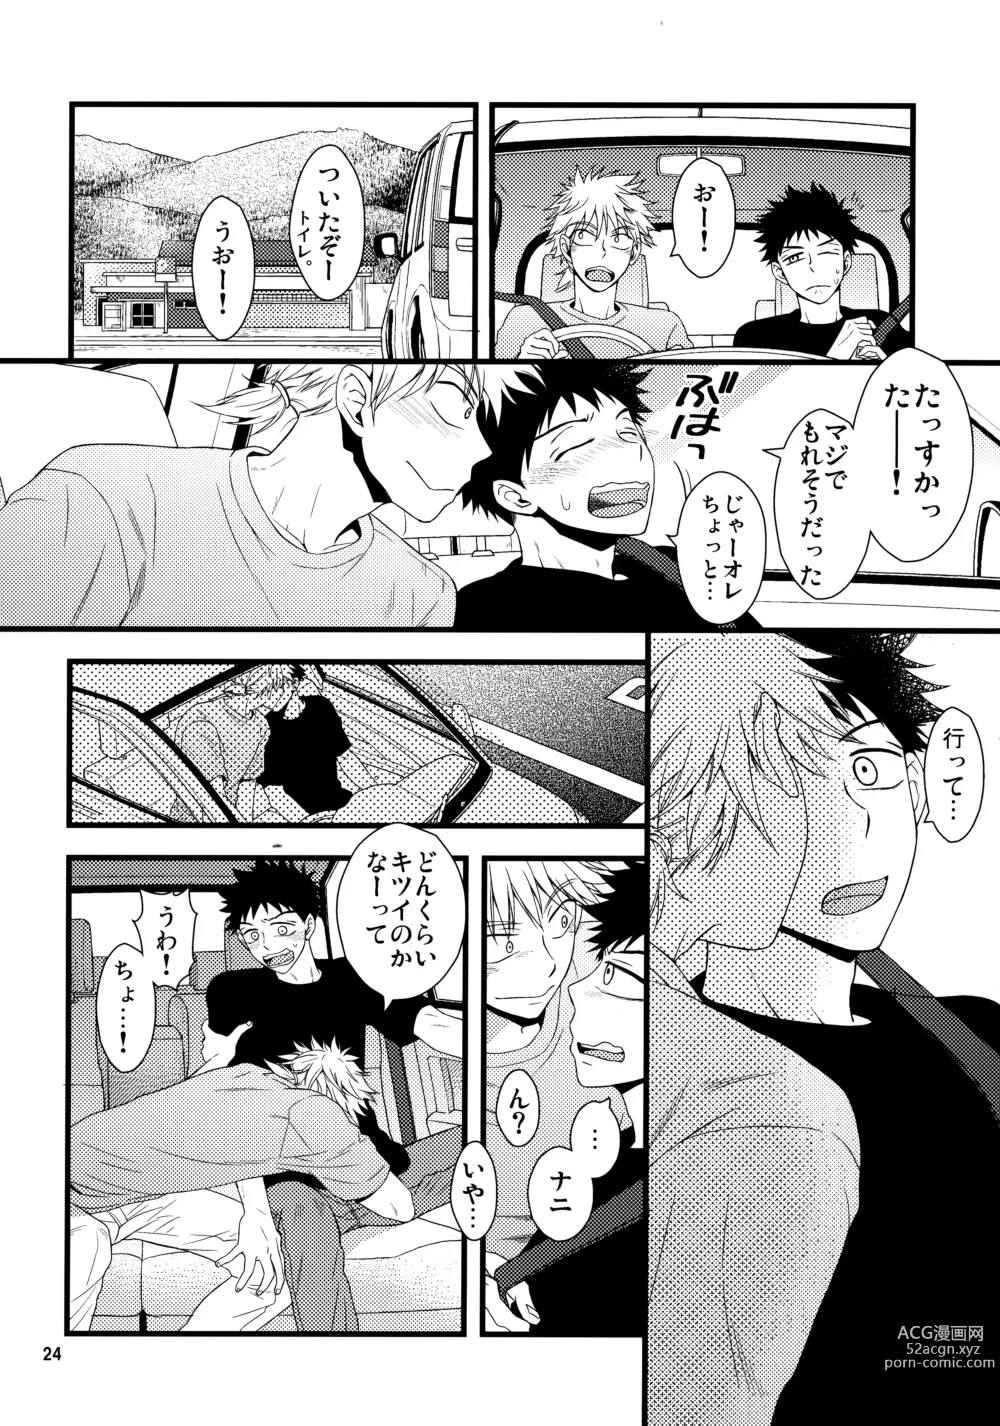 Page 23 of doujinshi Kaki